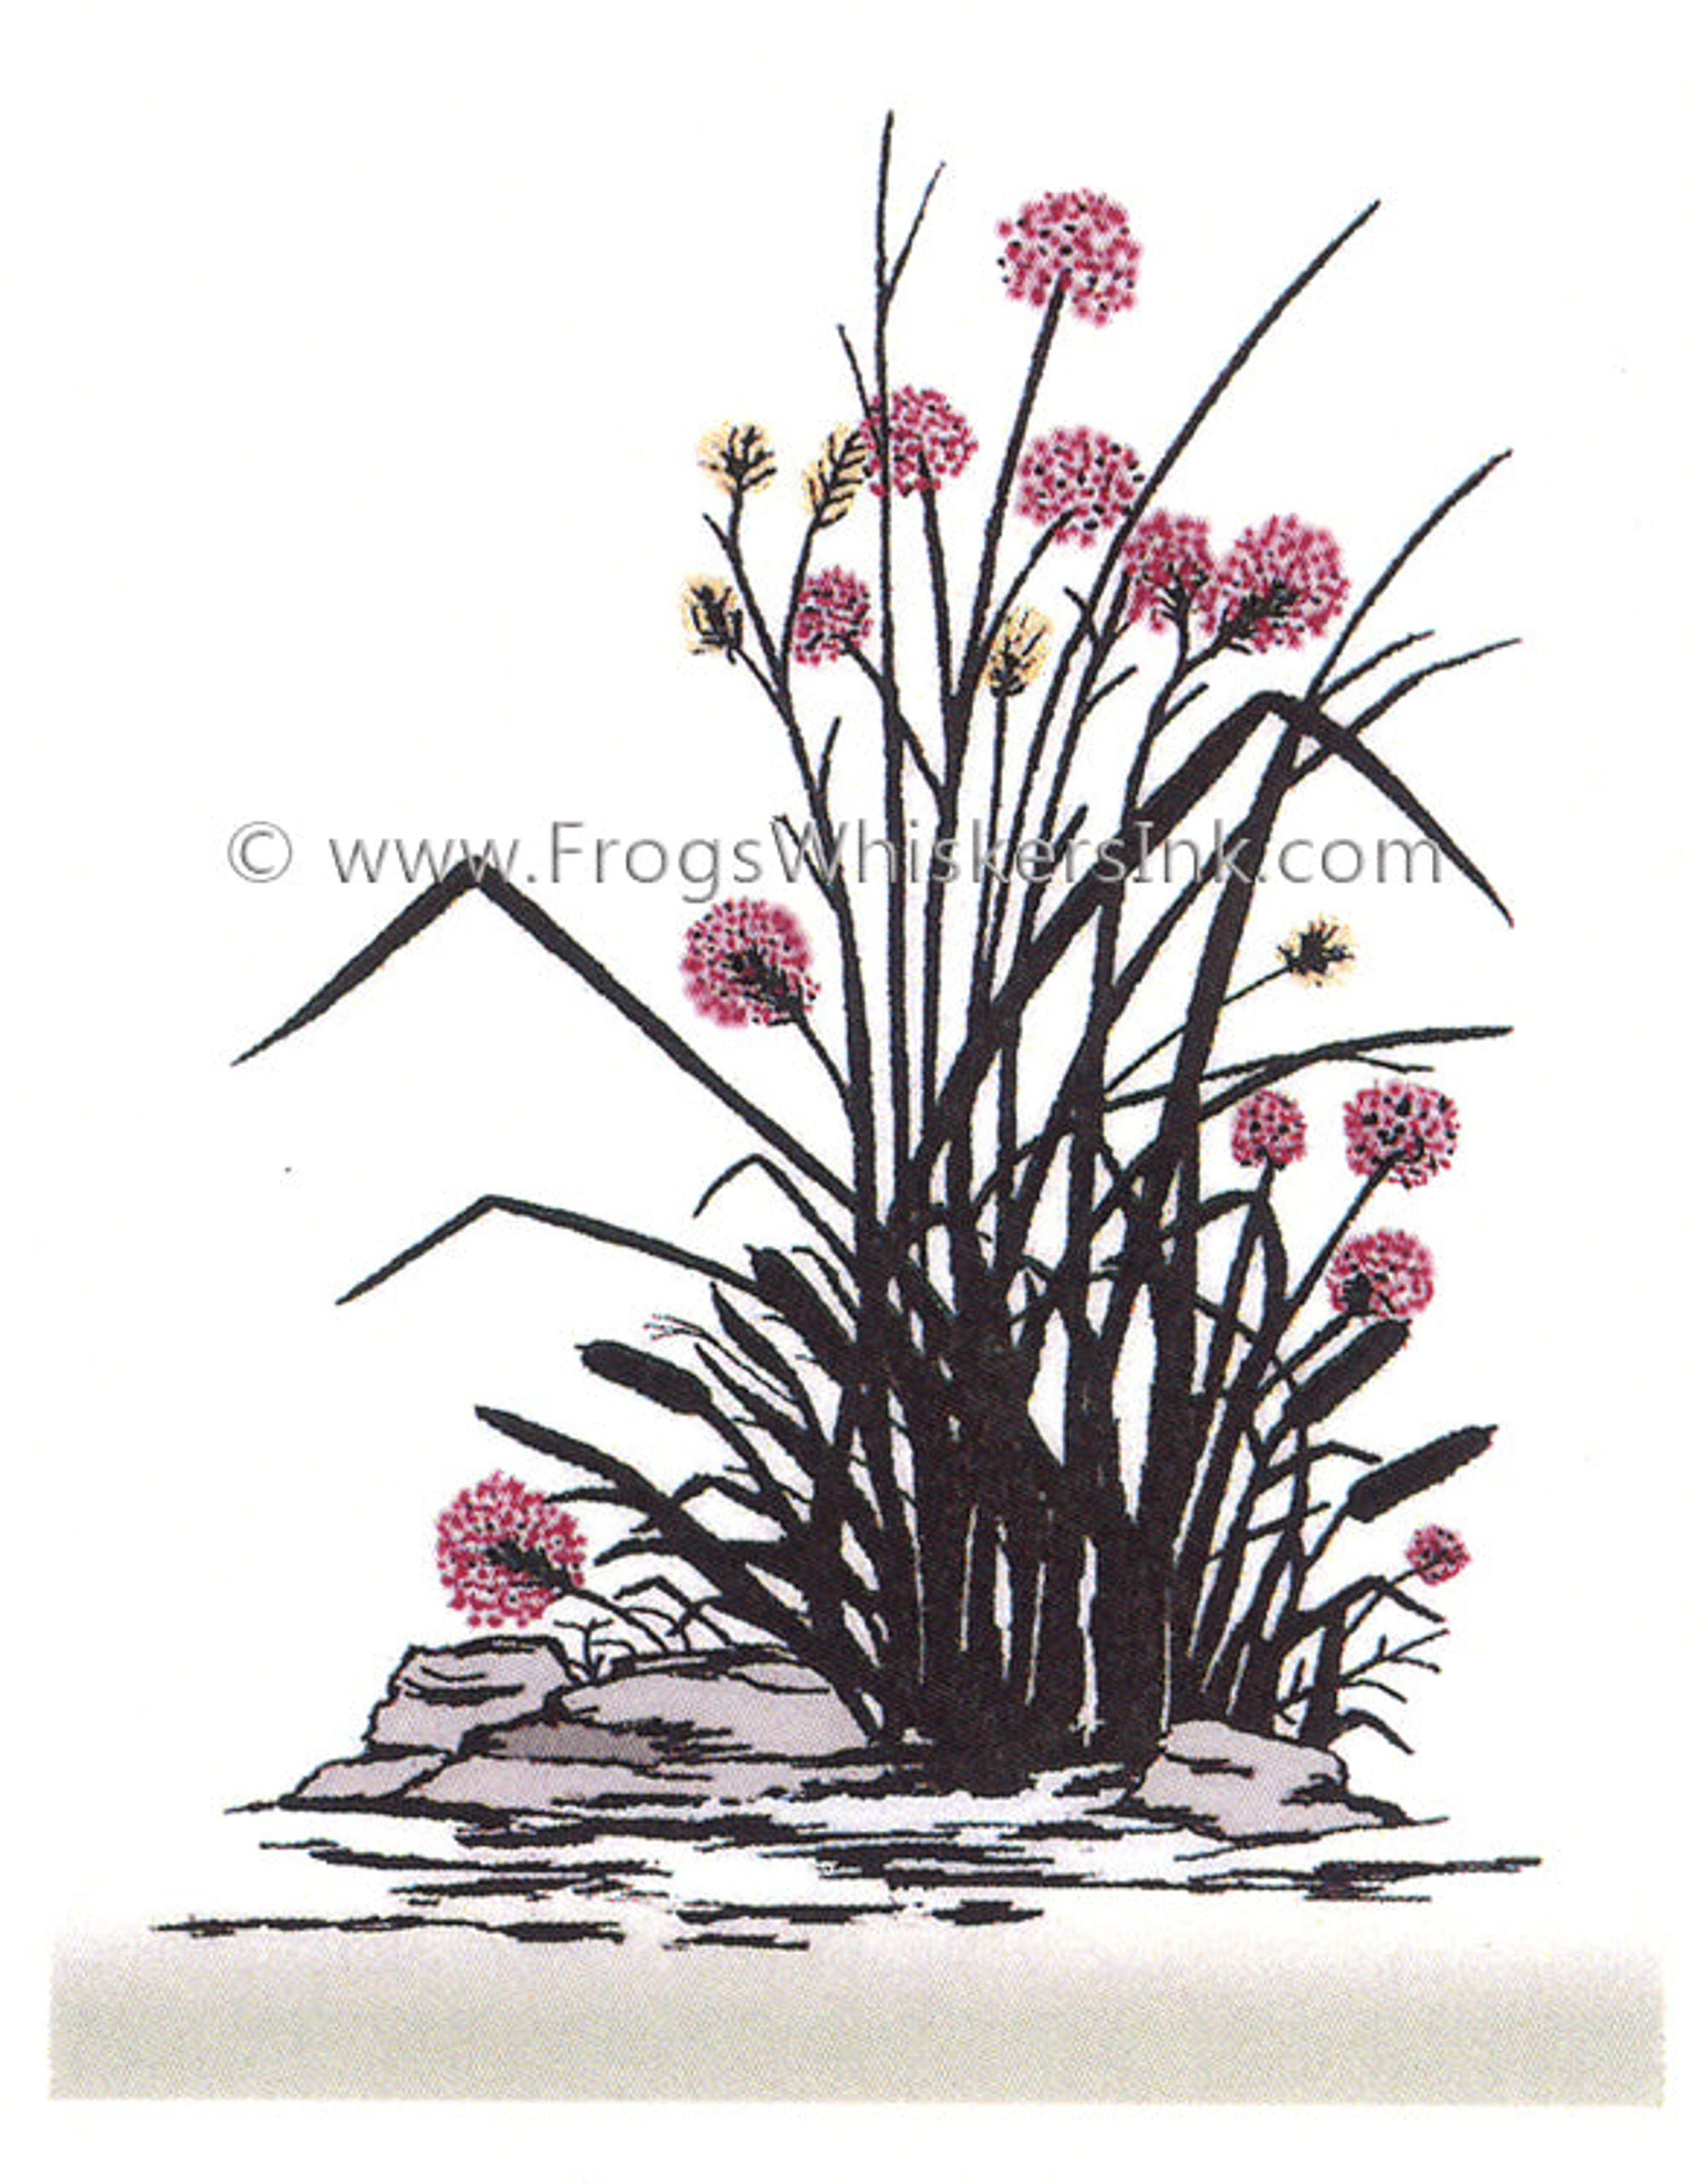 Frog's Whiskers Ink Stamp - Rocks & Flowers